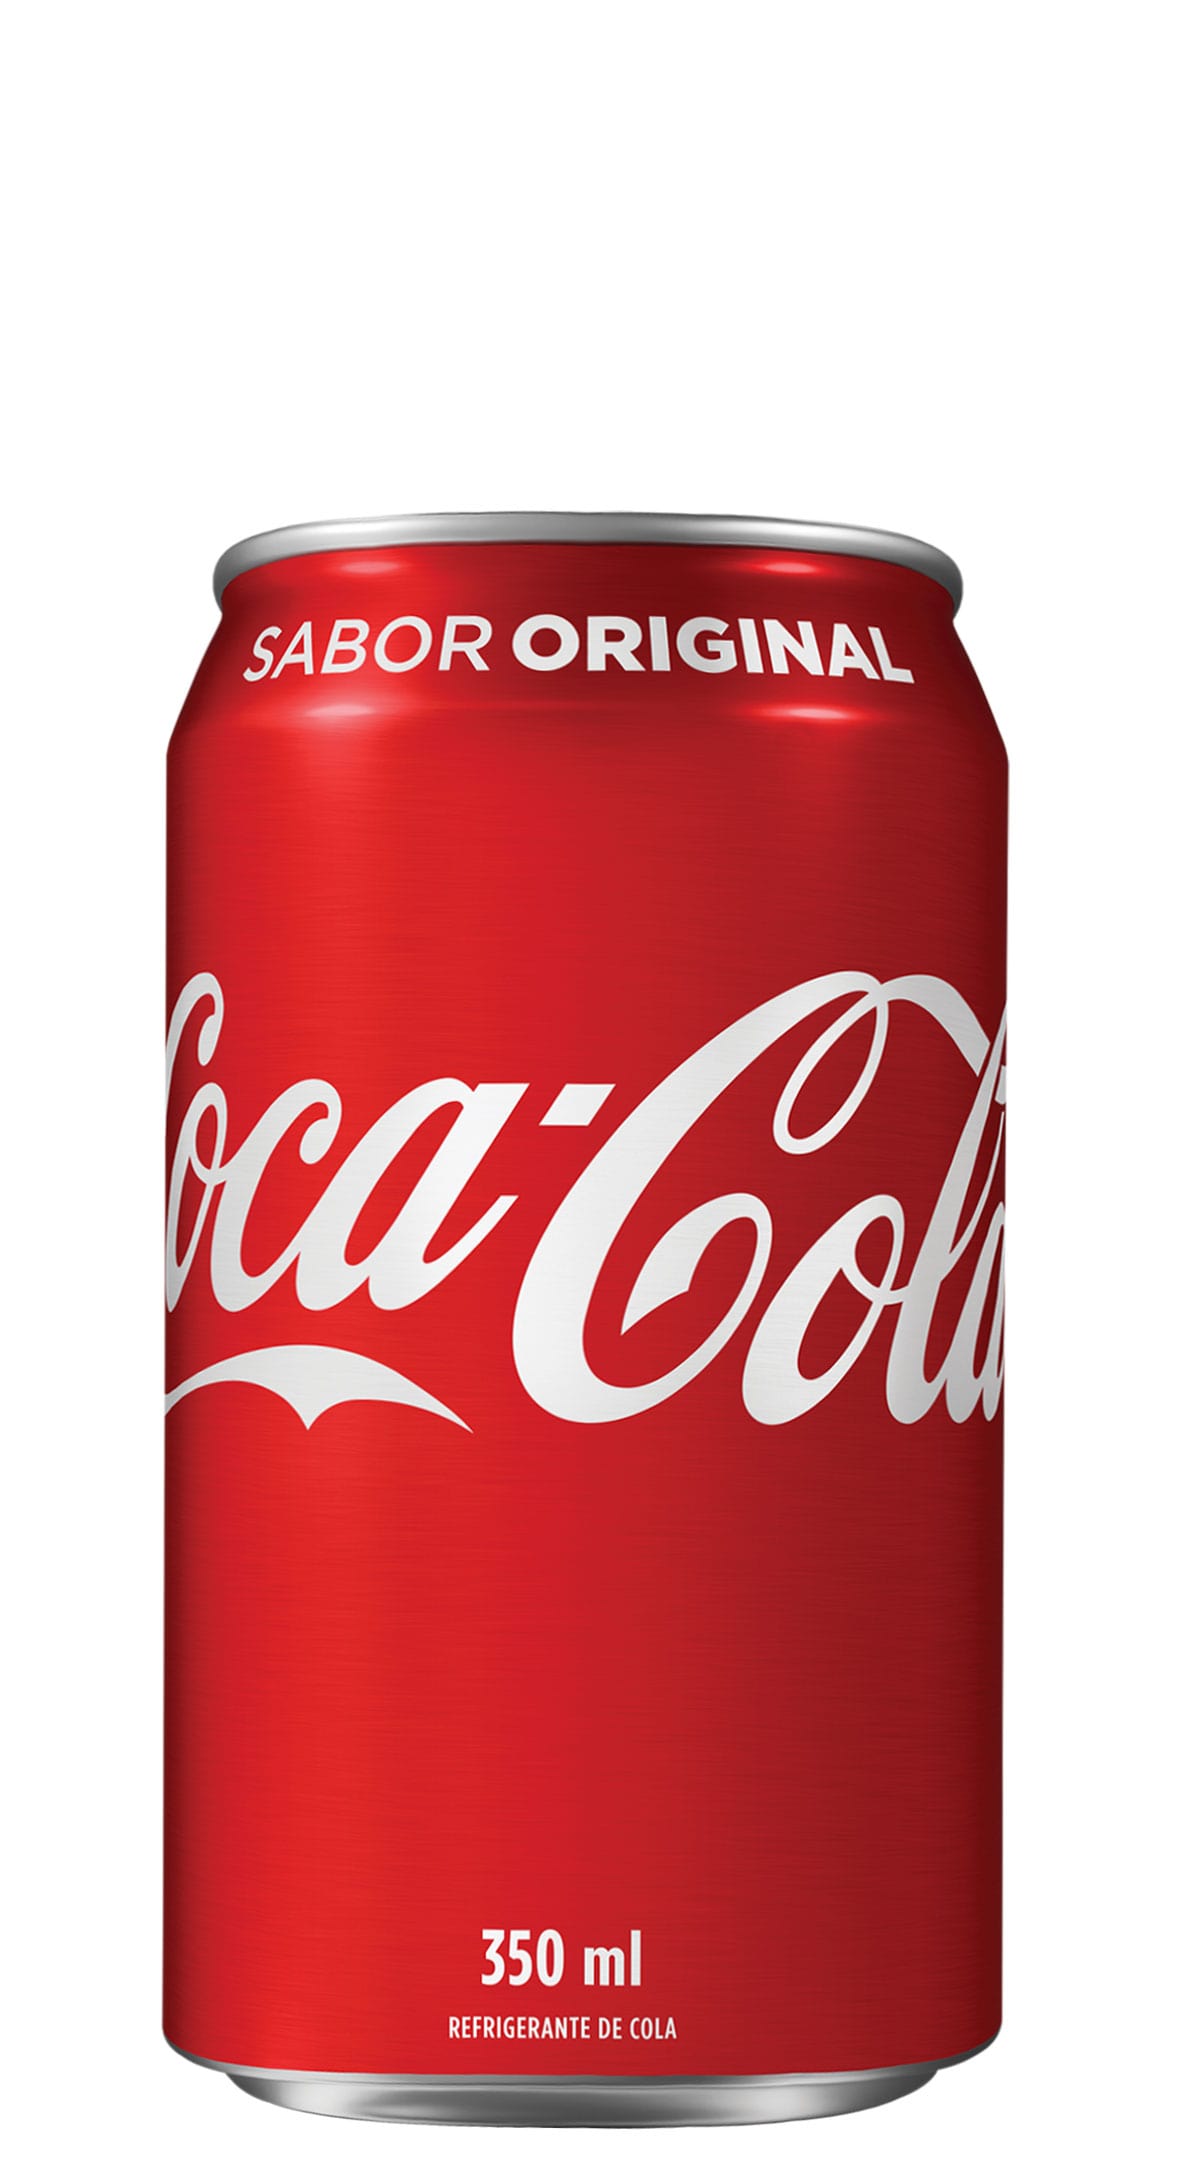 Refrigerante sabor original 350ml - Coca-Cola